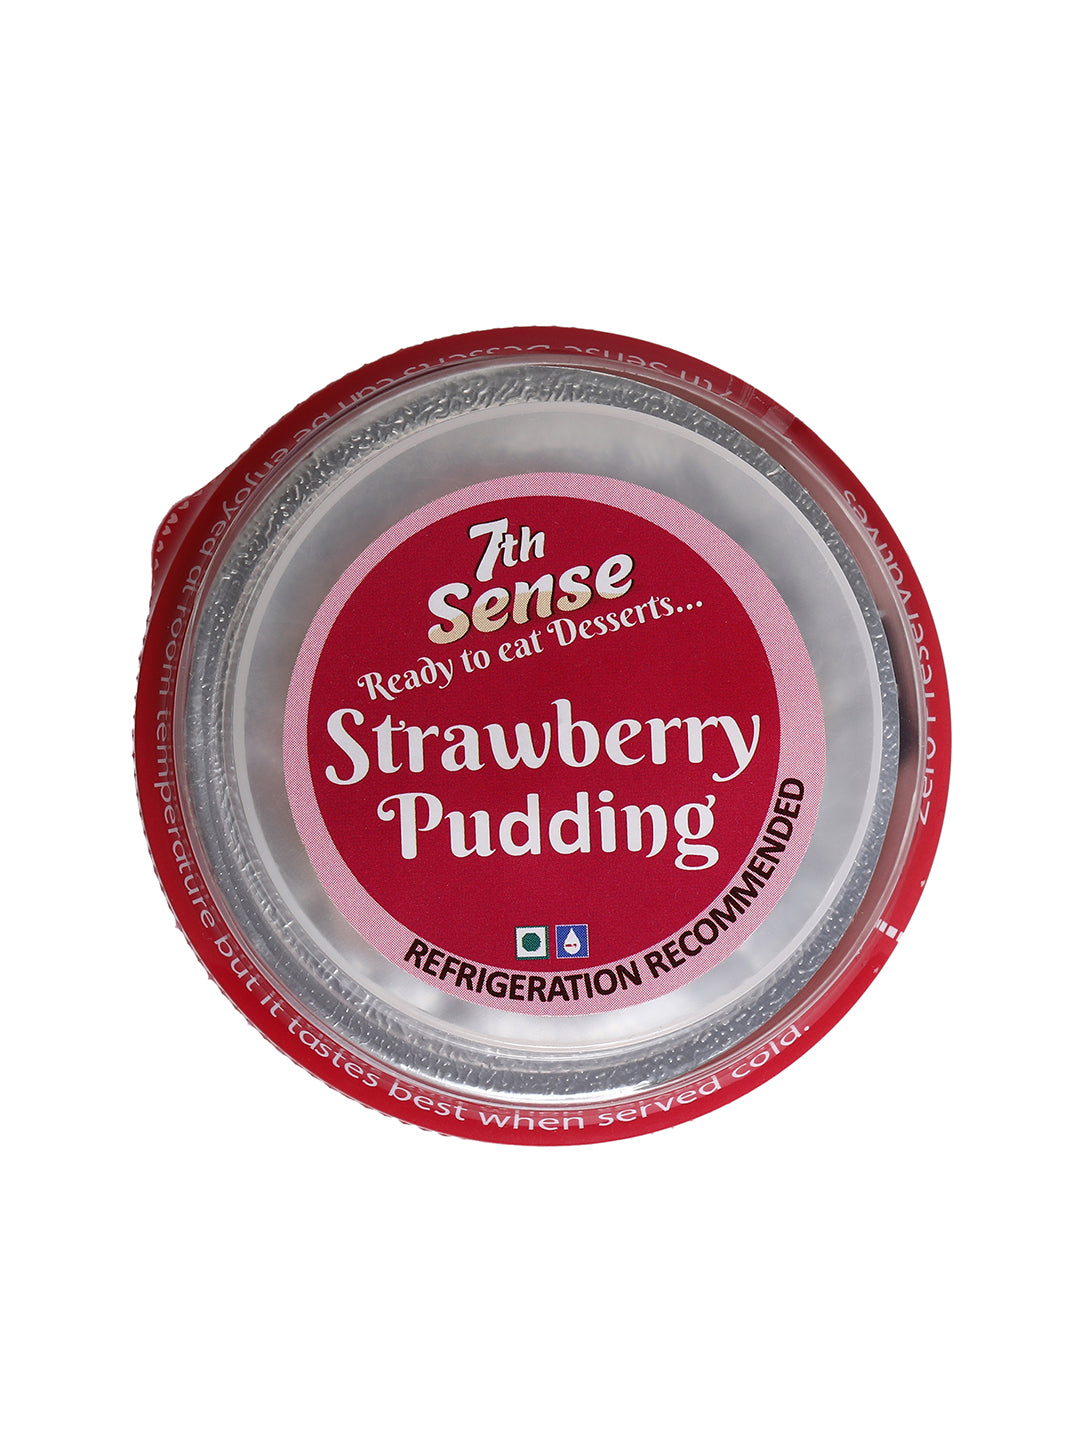 Strawberry and cream pudding